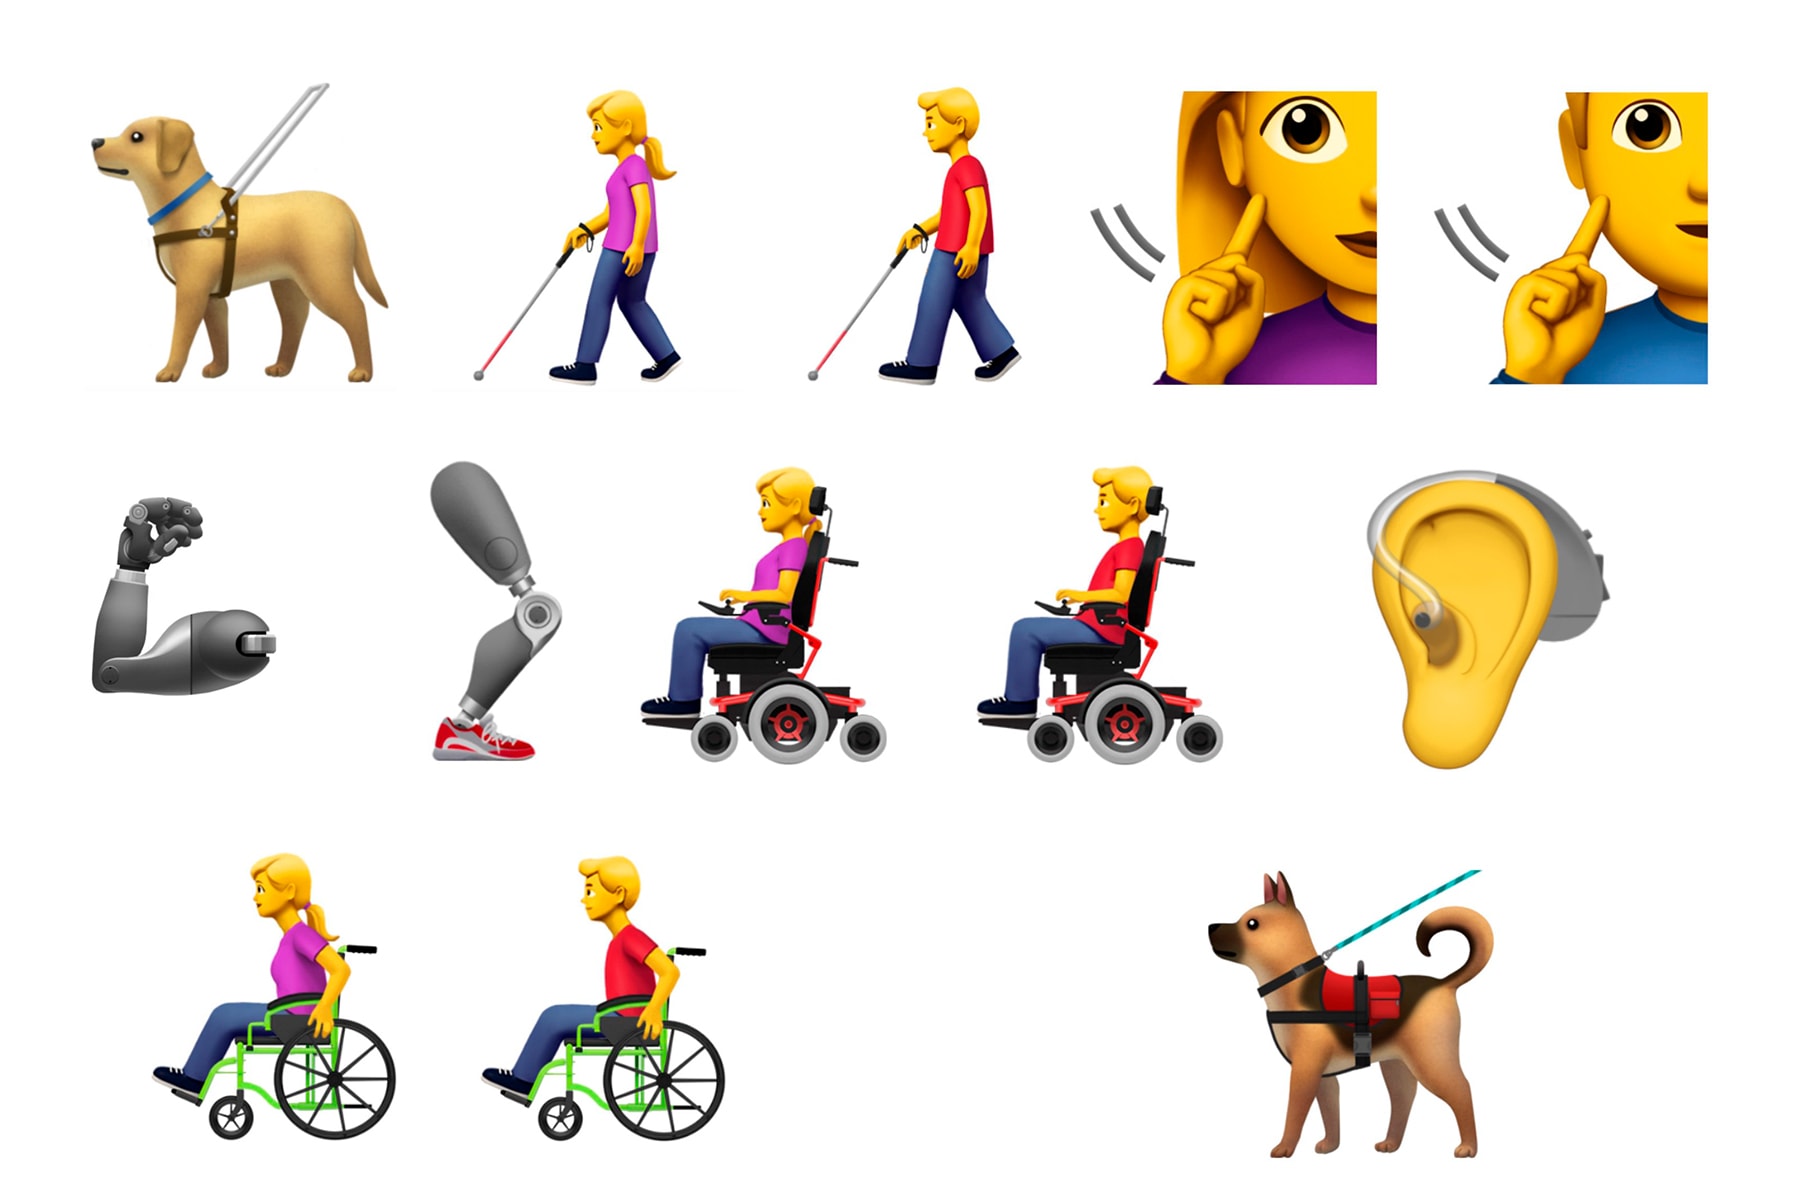 Apple iPhone Accessibility Emoji Guide Dog Cane Deaf Sign Hearing Aid Ear Wheelchair Mechanical Prosthetic Arm Leg Service